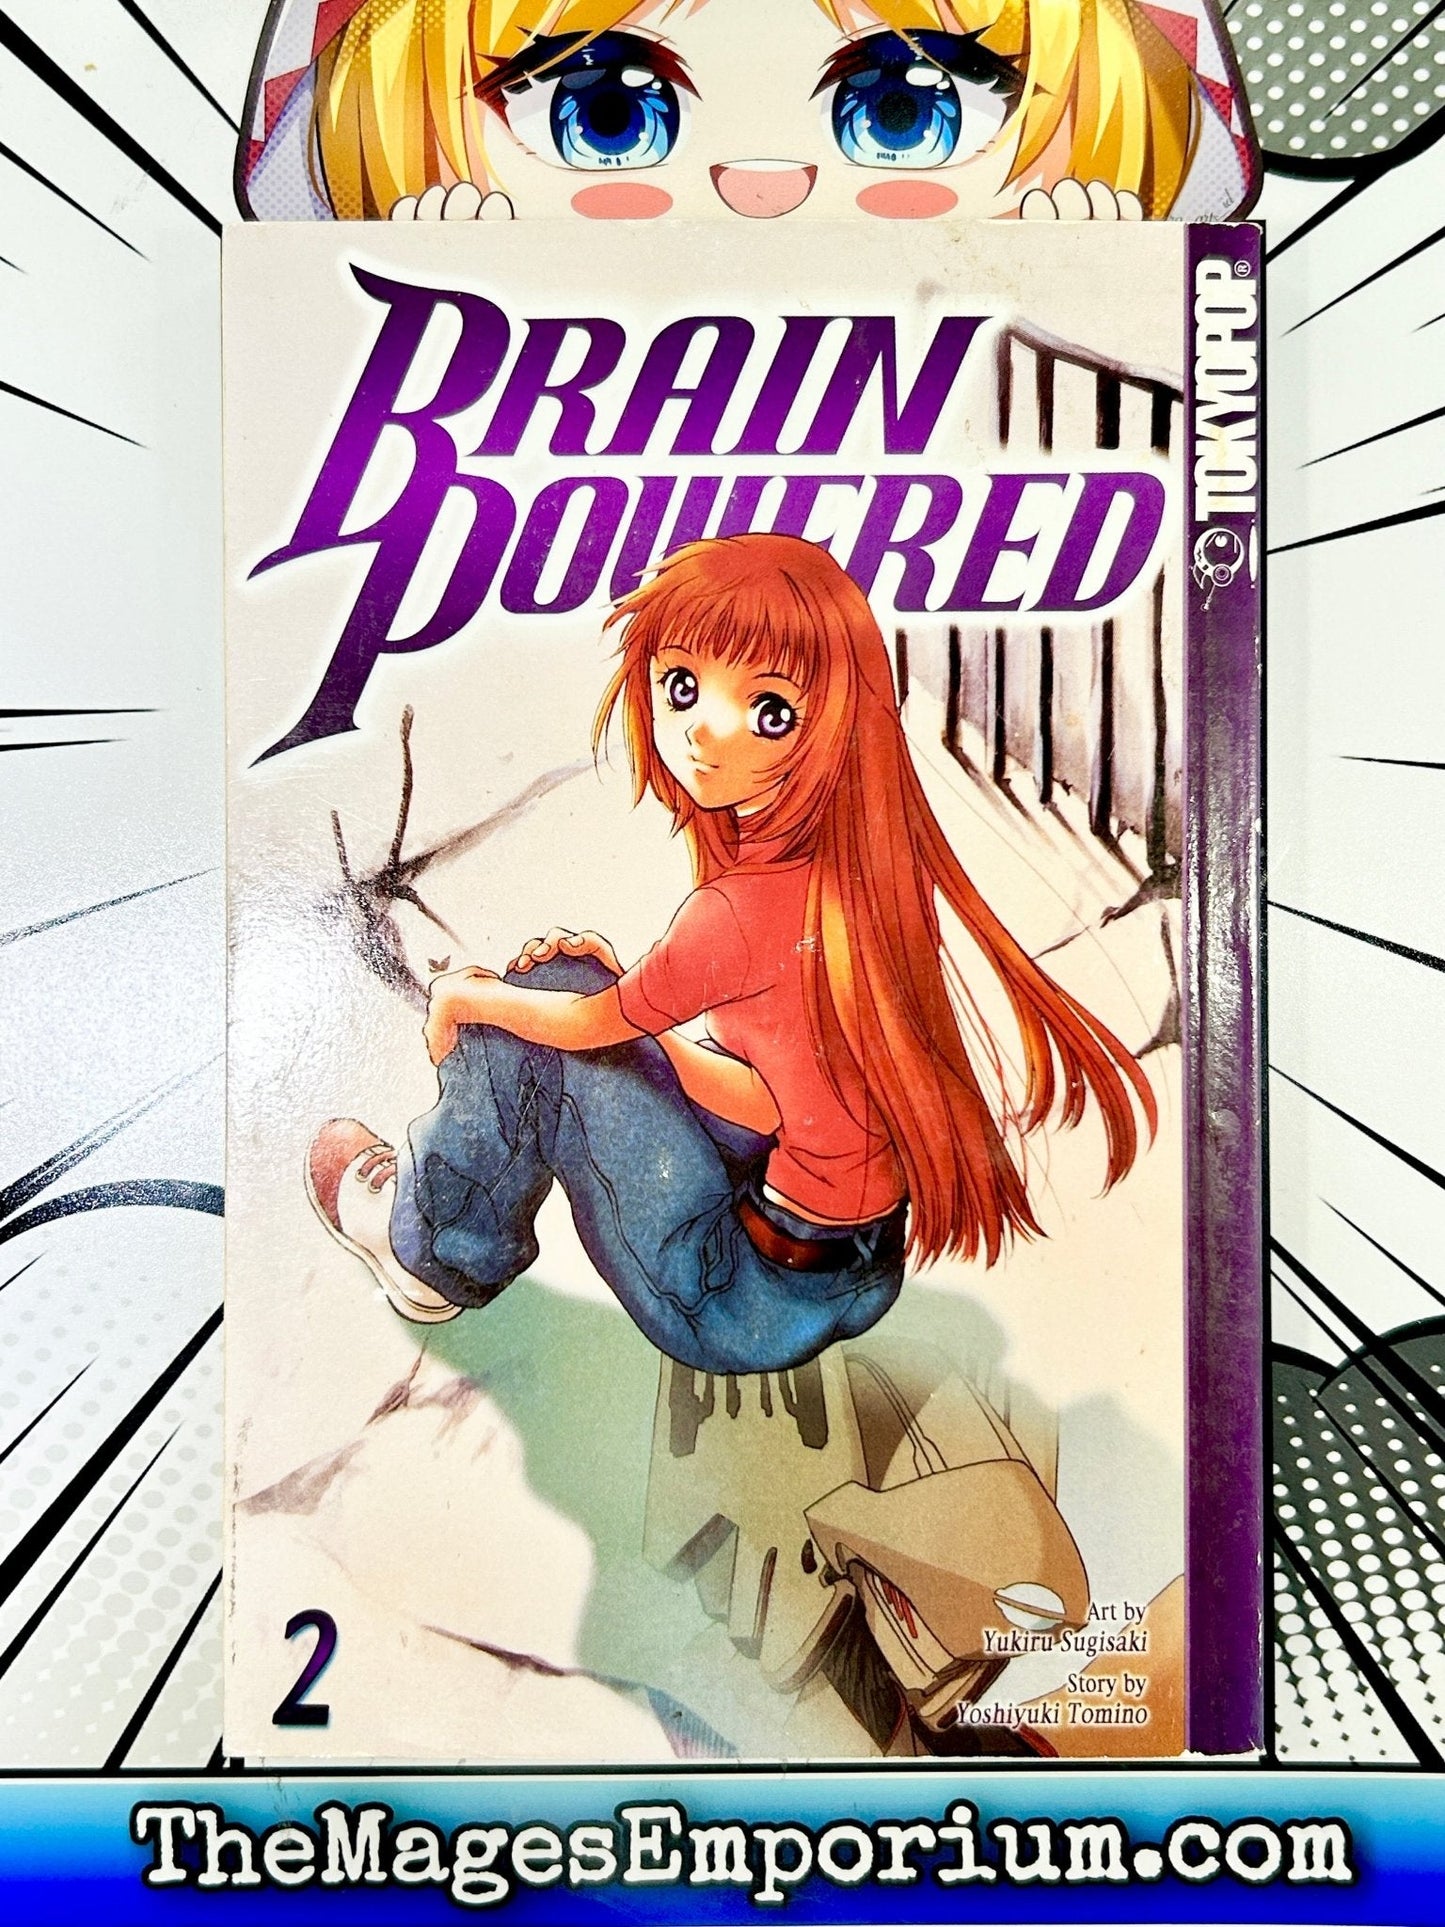 Brain Powered Vol 2